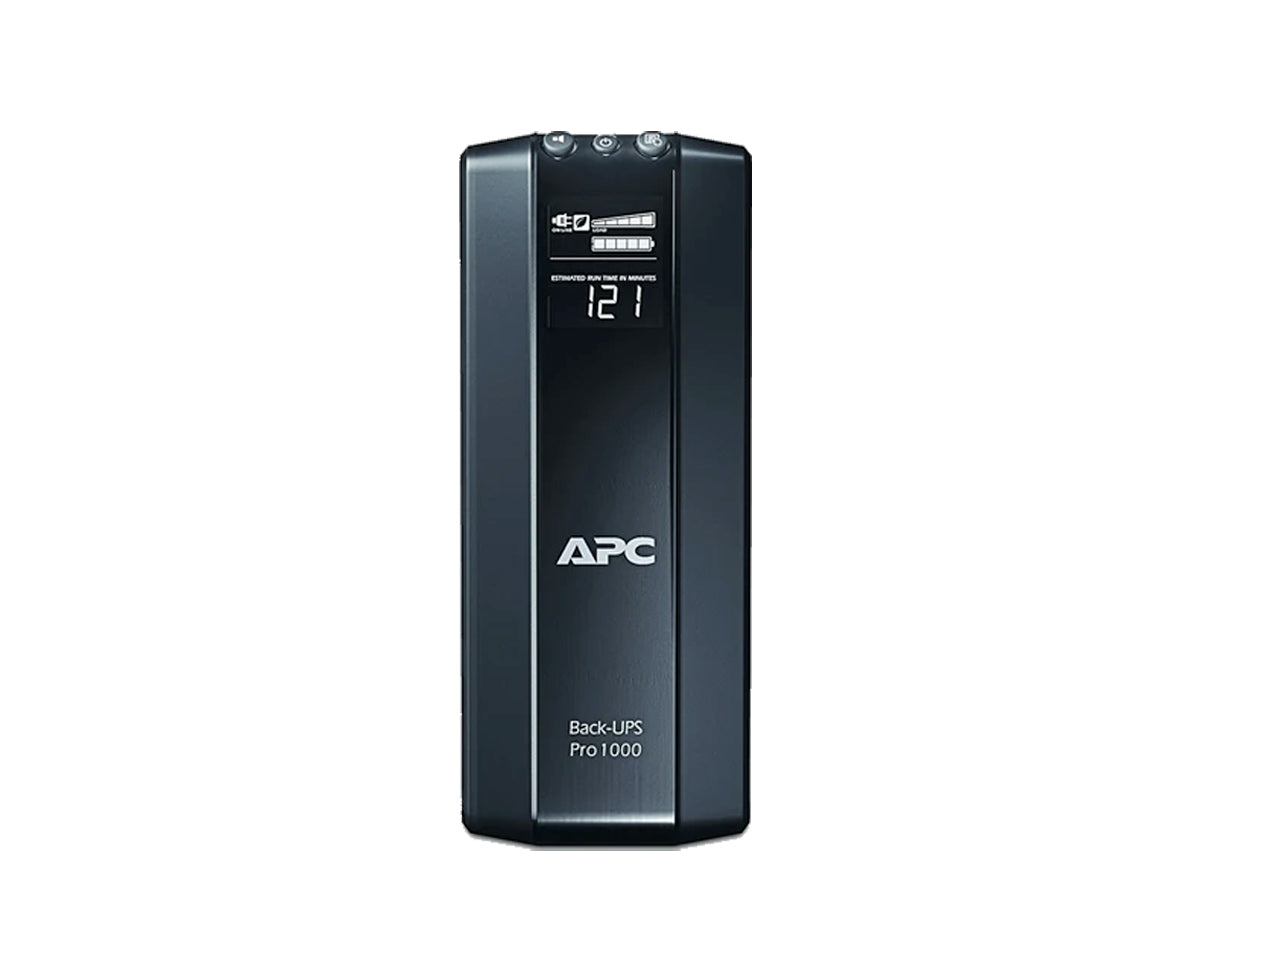 APC Power-Saving Pro 1000 with LCD, 230V BR1000G Back-UPS